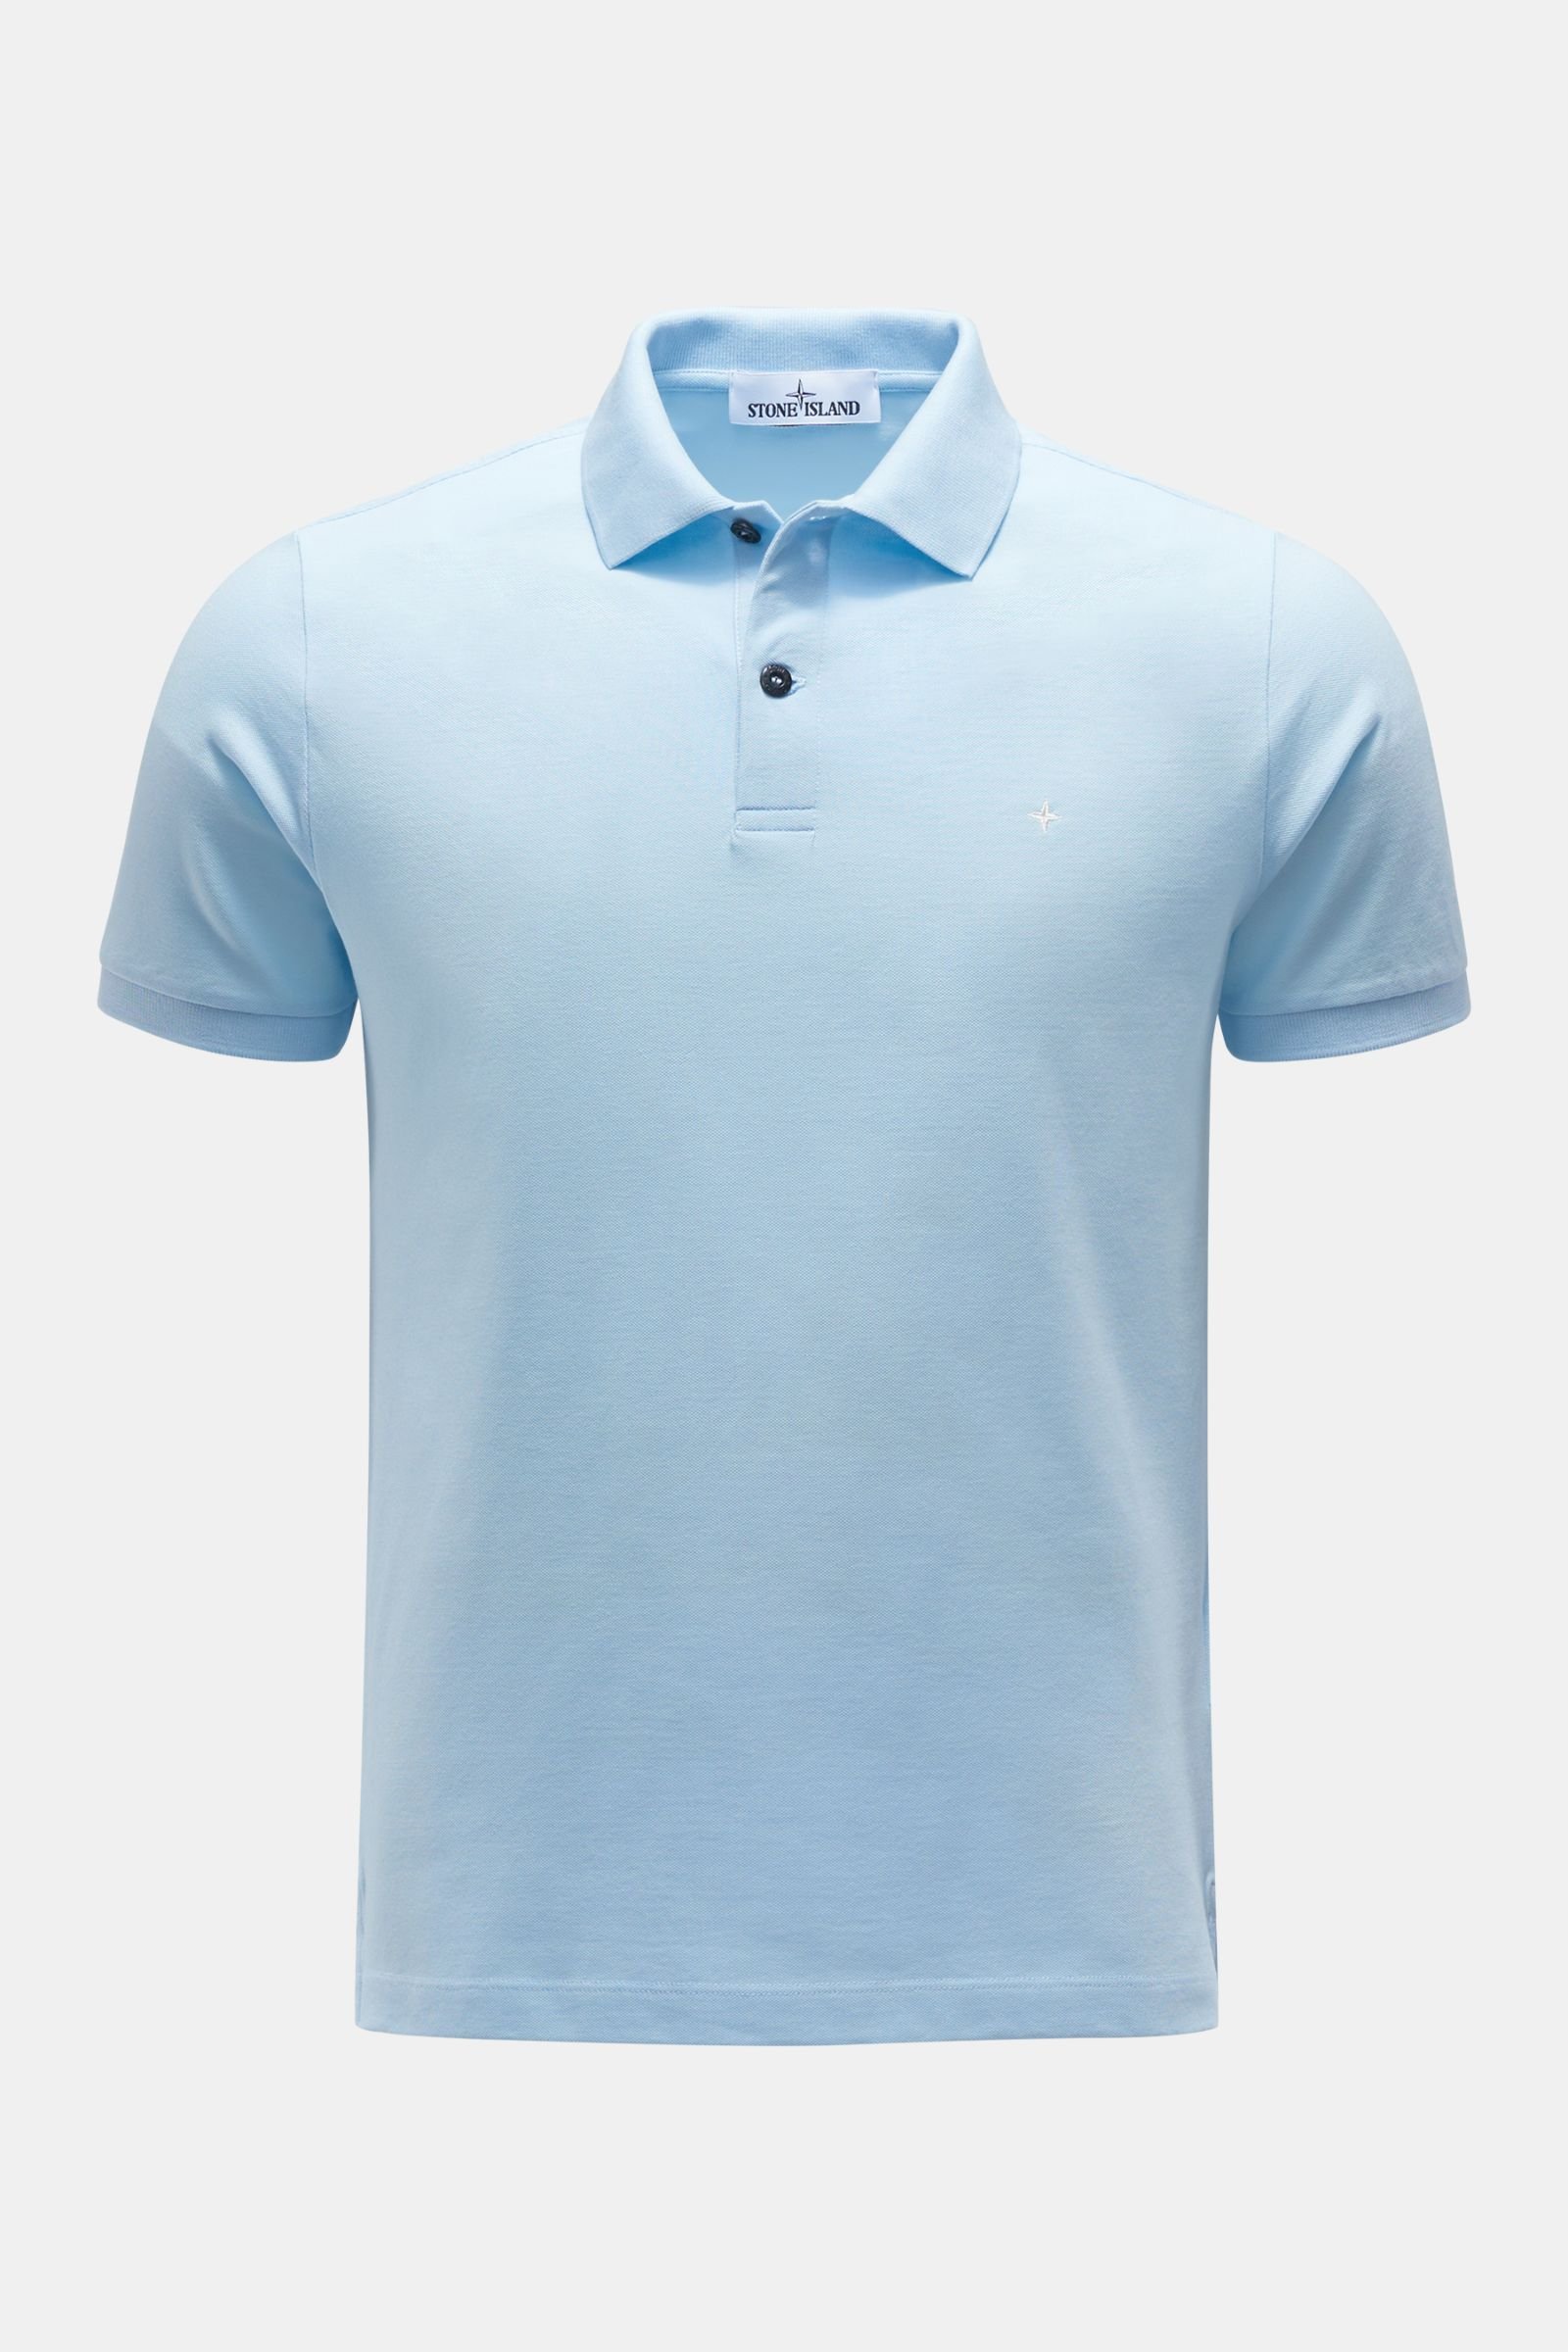 Polo shirt pastel blue